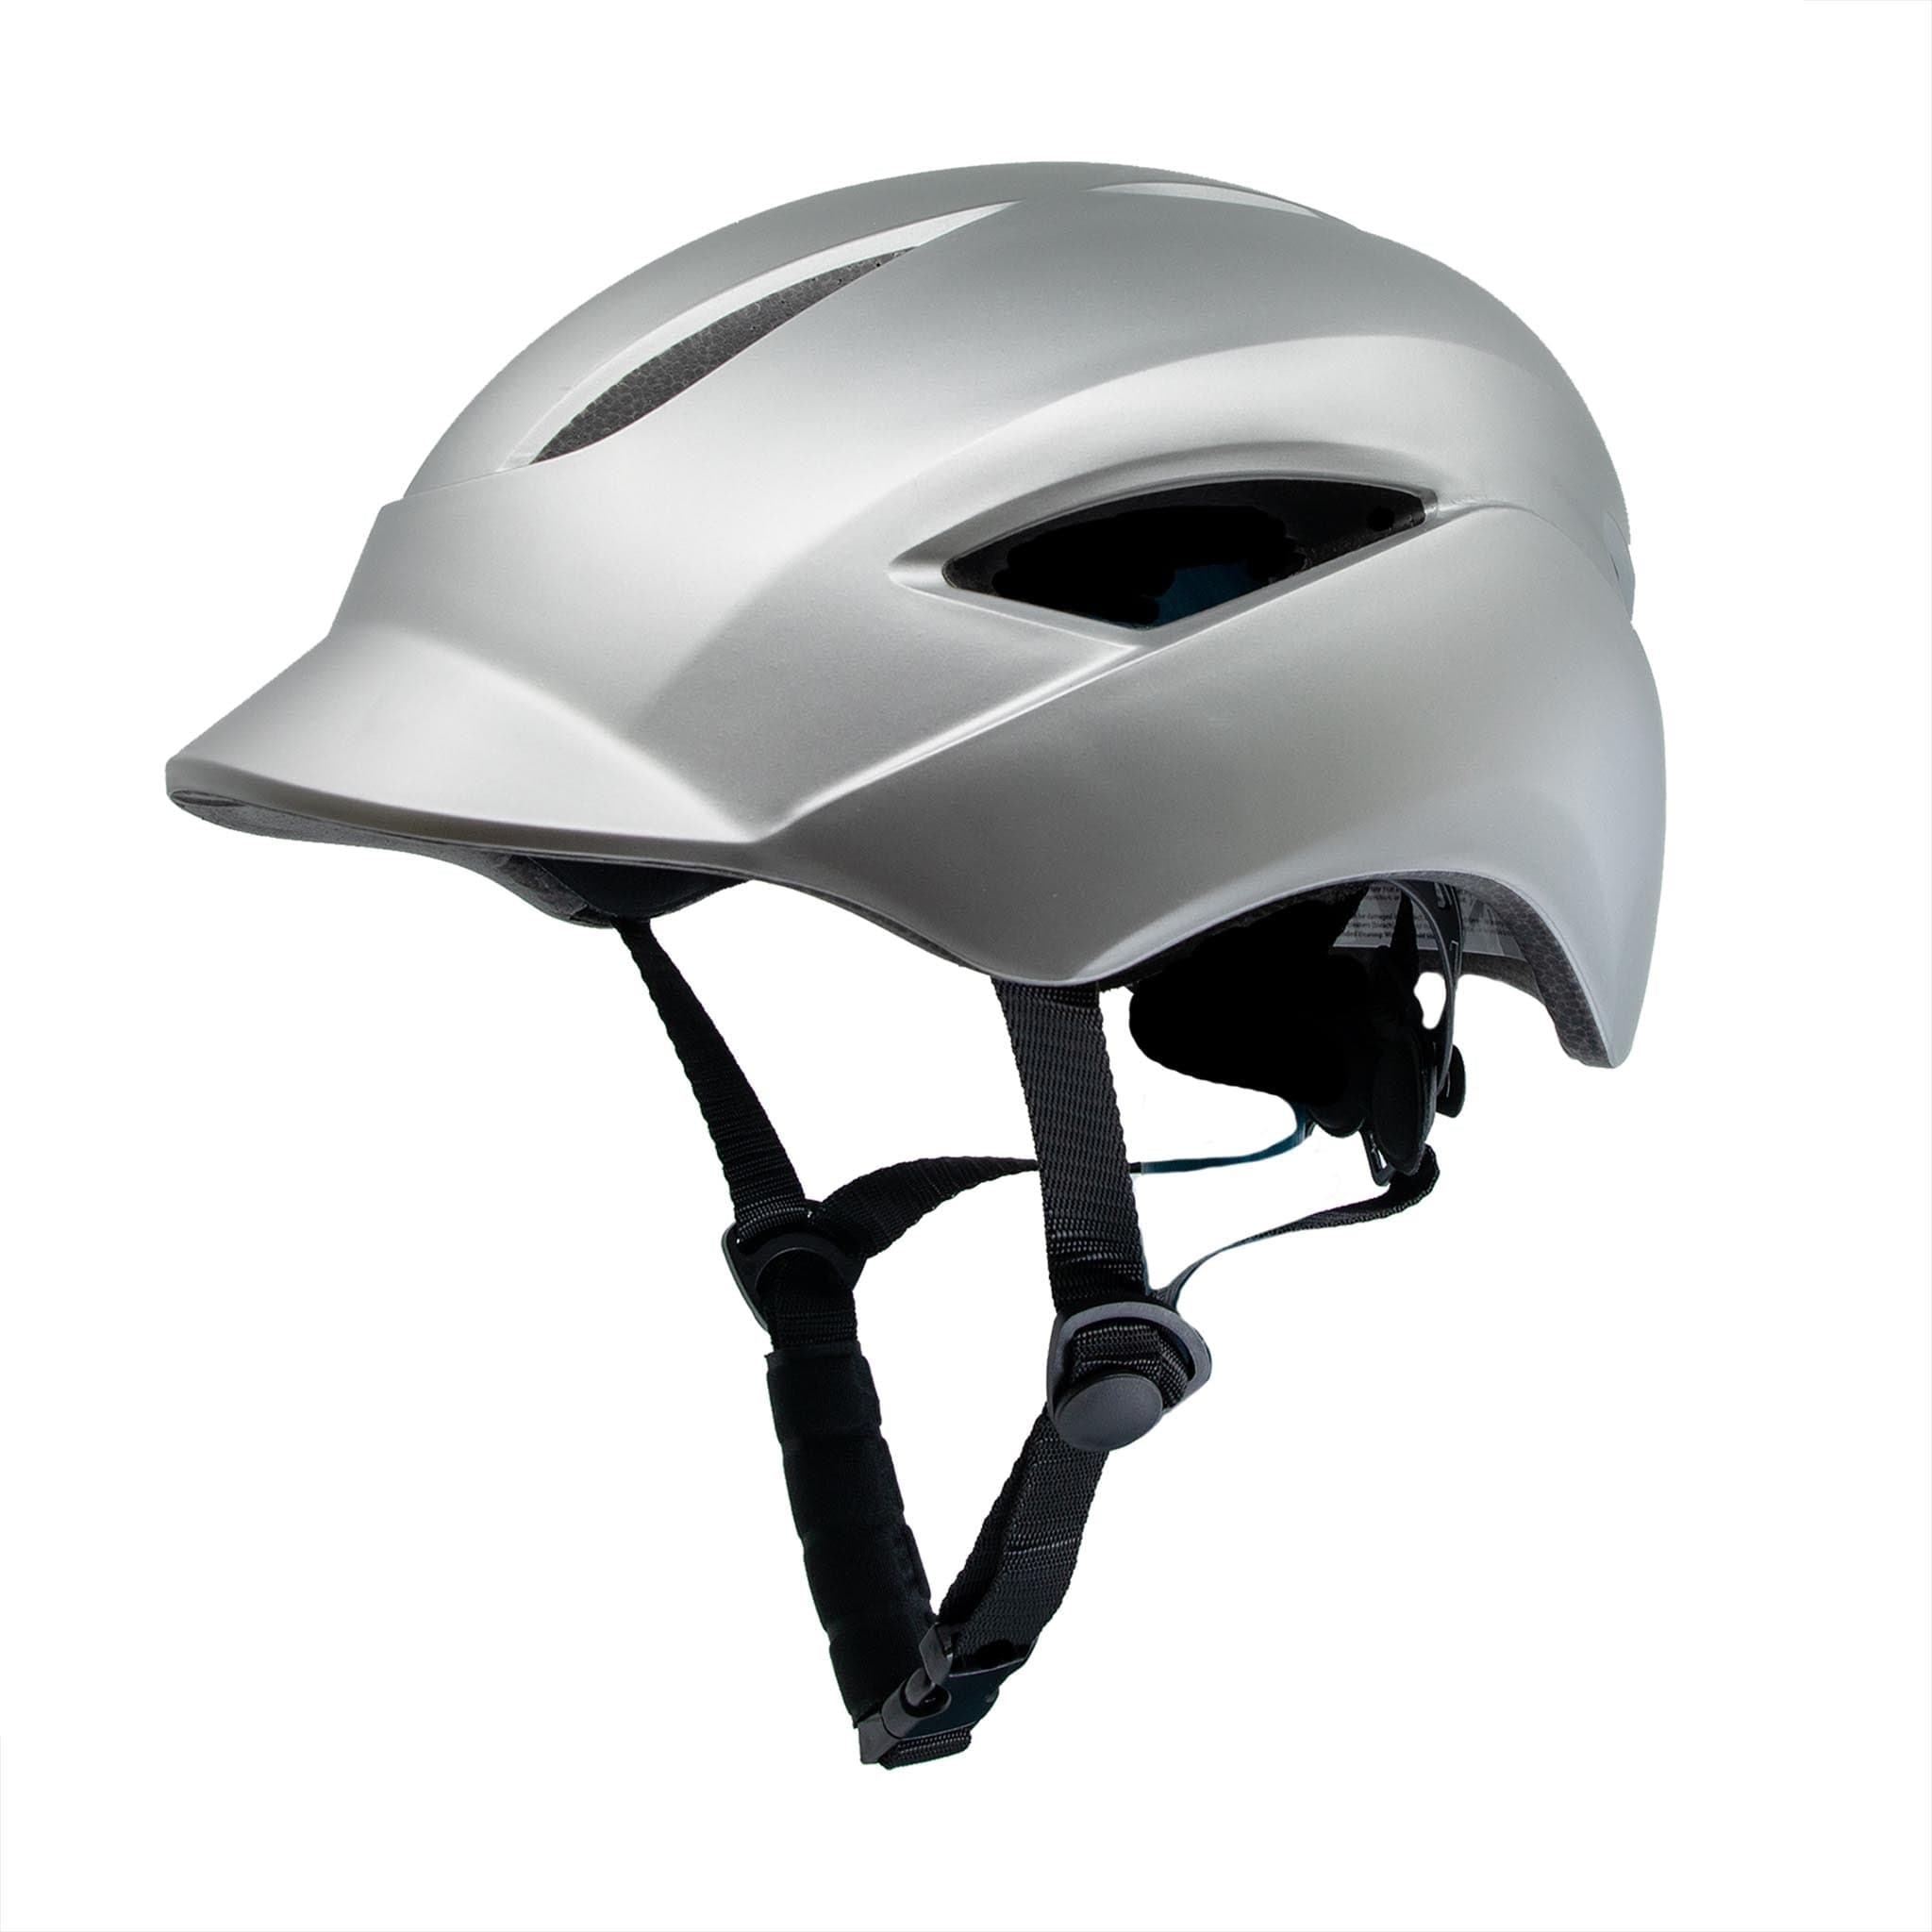 Matt silver bicycle helmet. Stylish bike helmets mens